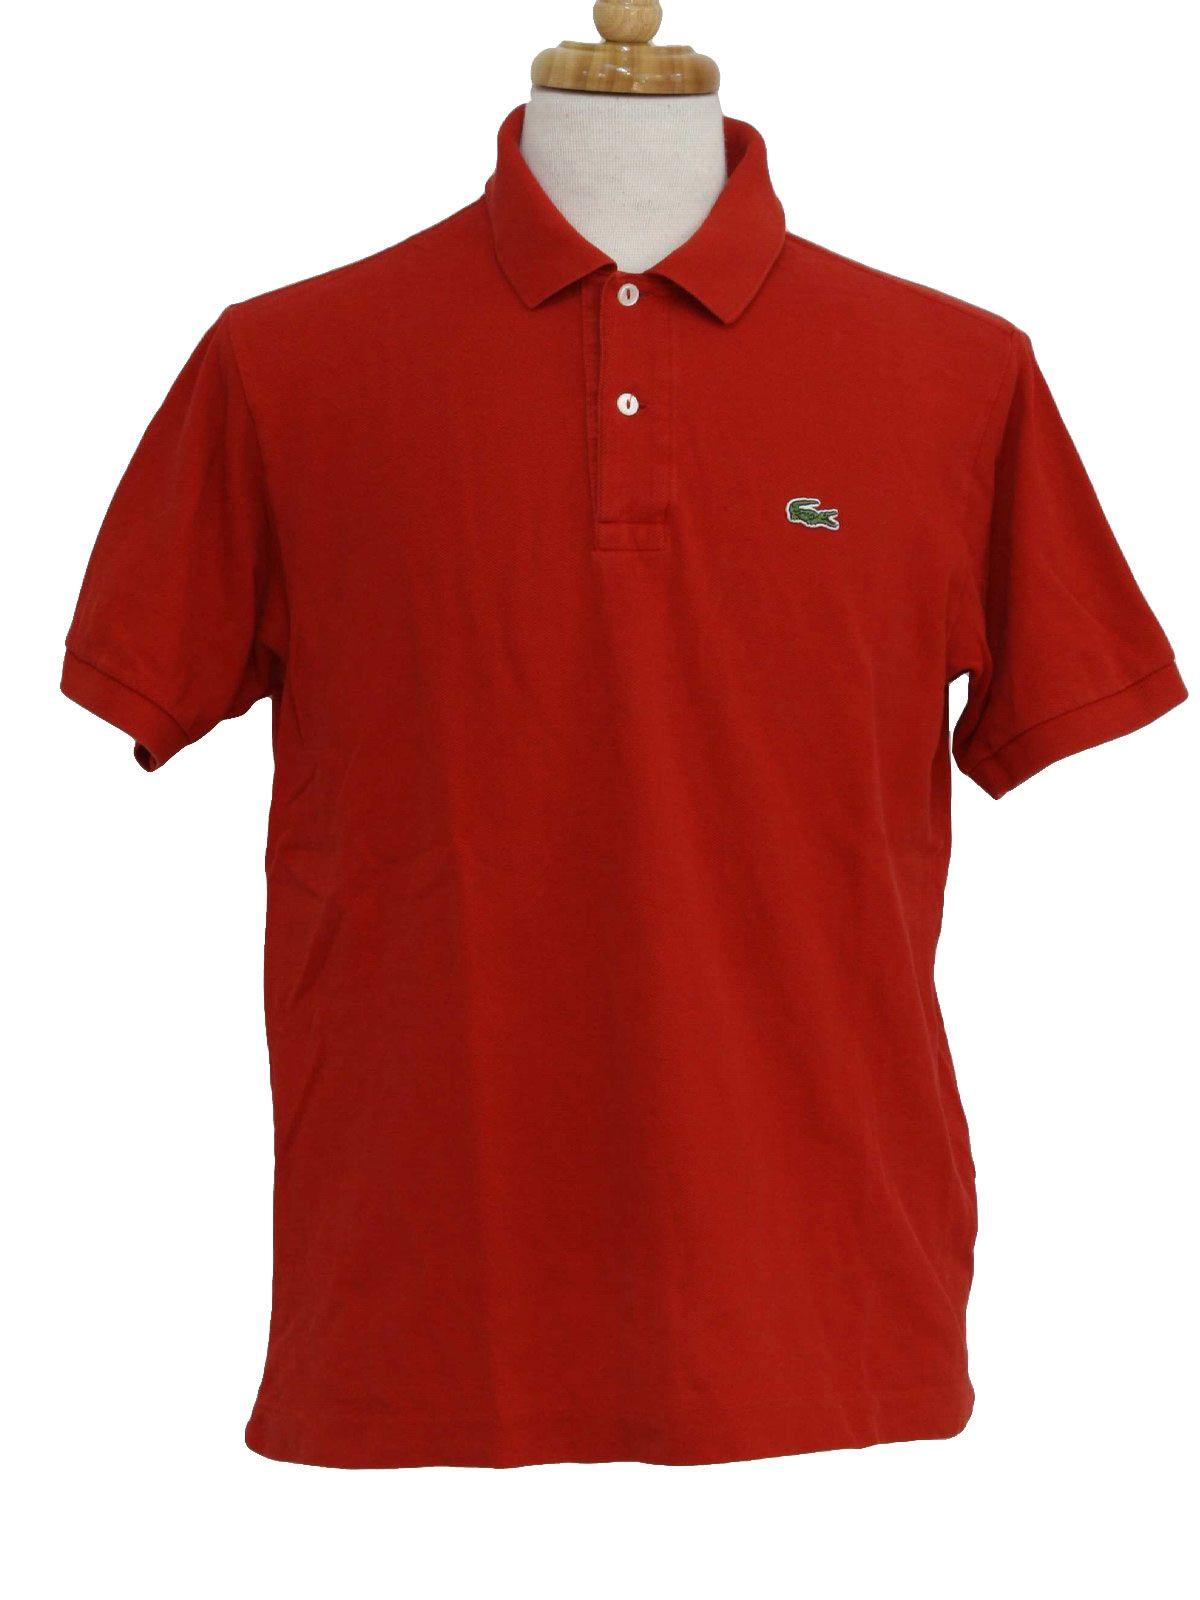 Alligator Shirt Logo - 80's Vintage Shirt: 80s -Lacoste- Mens red woven cotton short sleeve ...